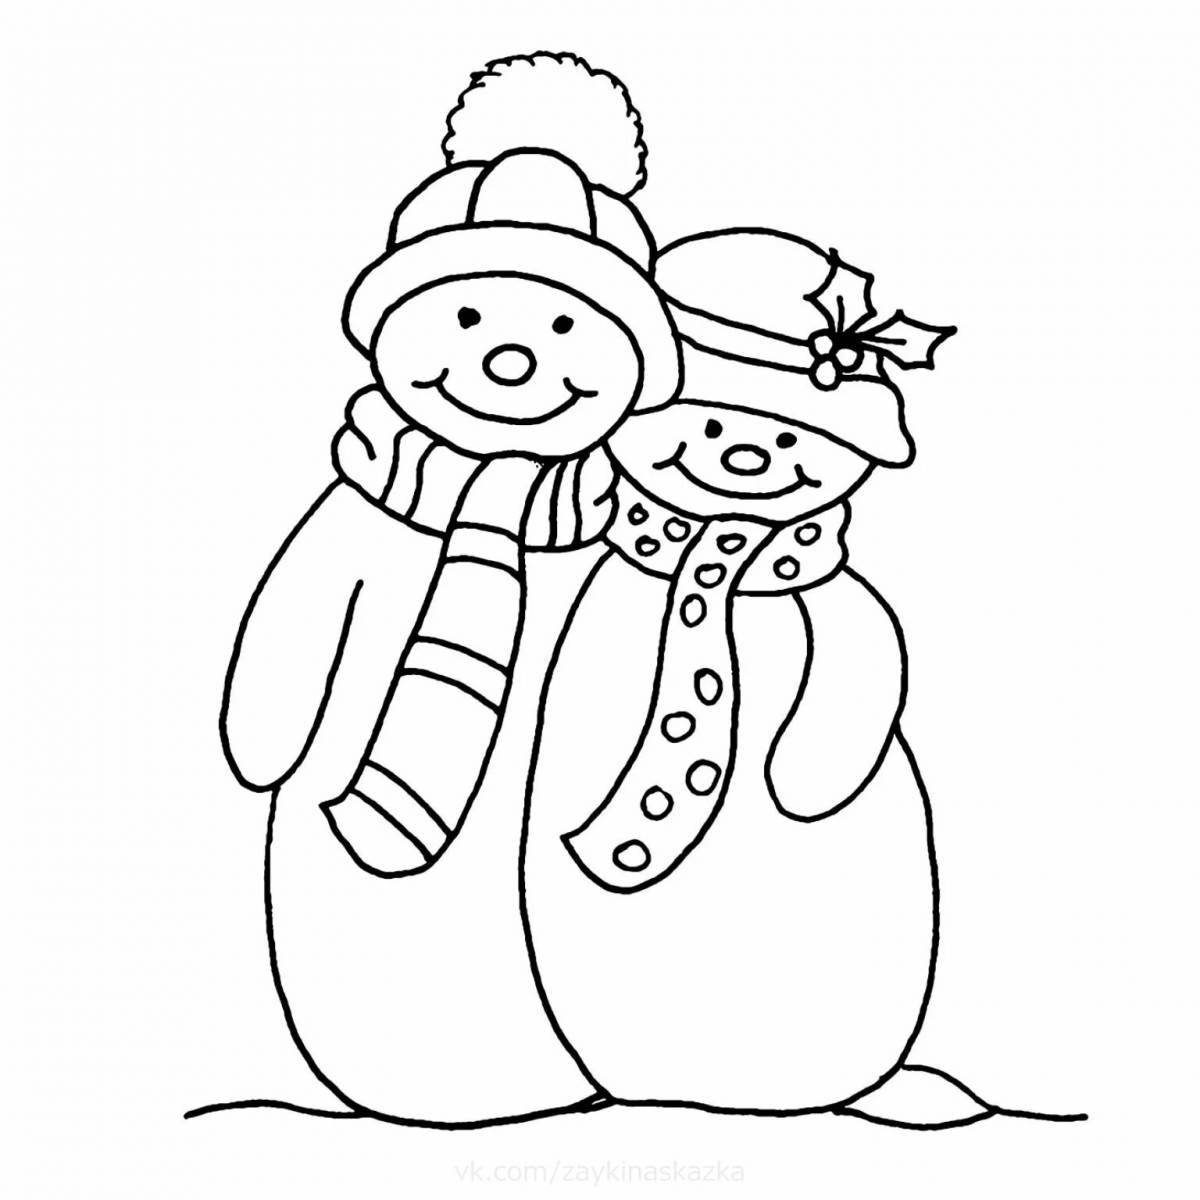 Playful coloring cute snowman